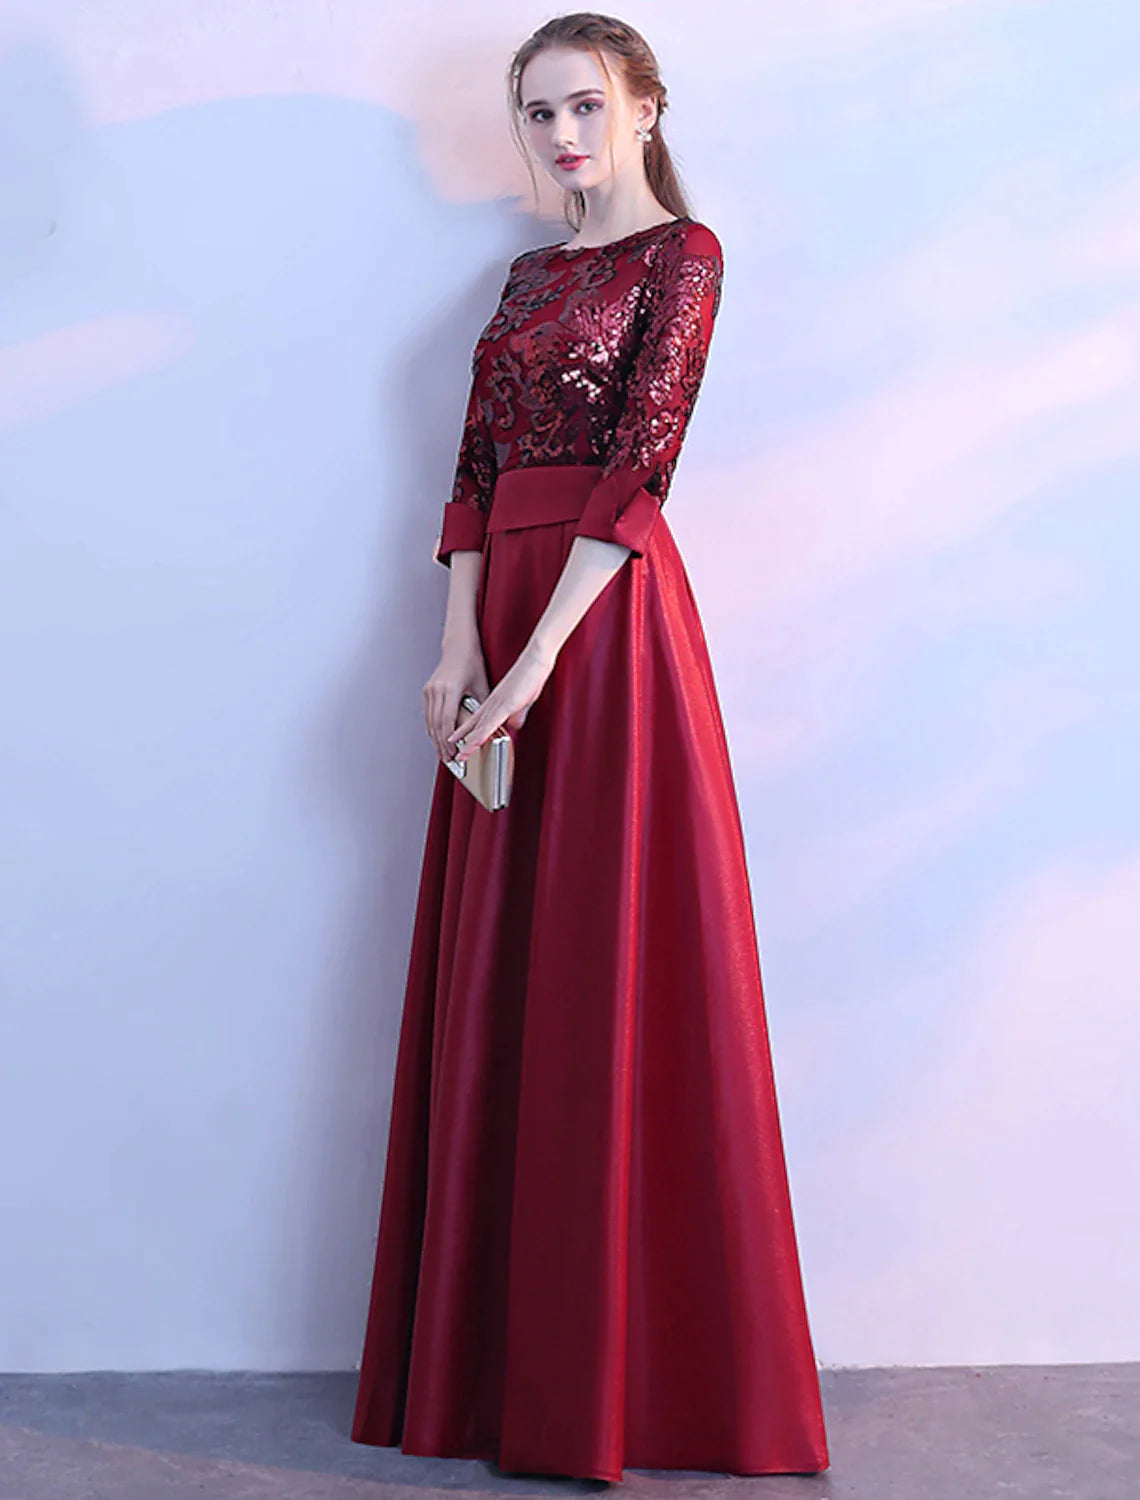 A-Line Glittering Elegant Prom Formal Evening Dress Jewel Neck 3/4 Length Sleeve Floor Length Satin with Sequin